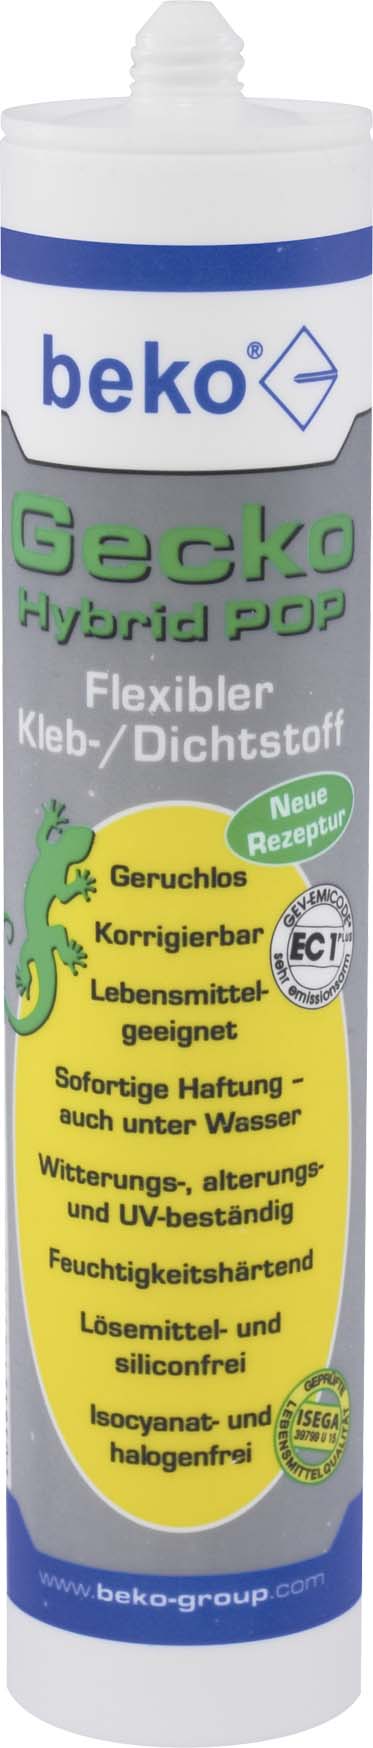 Beko Gecko Kleb-/Dichtstoff 310ml HybridPOP grau 2453103